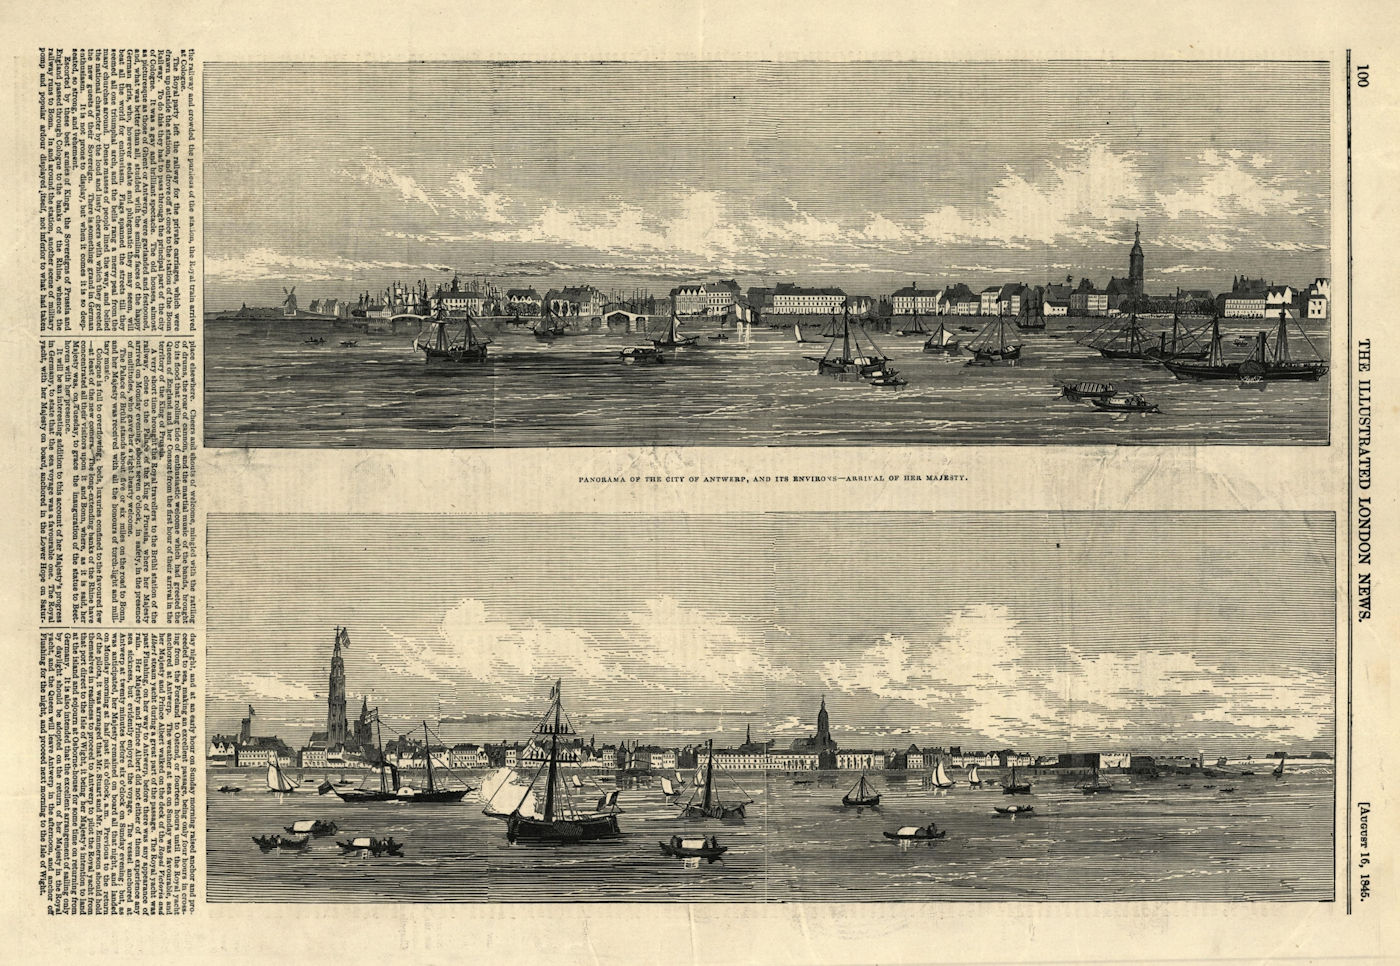 Antwerp panorama from the sea. Arrival of Queen Victoria. Belgium 1845 print